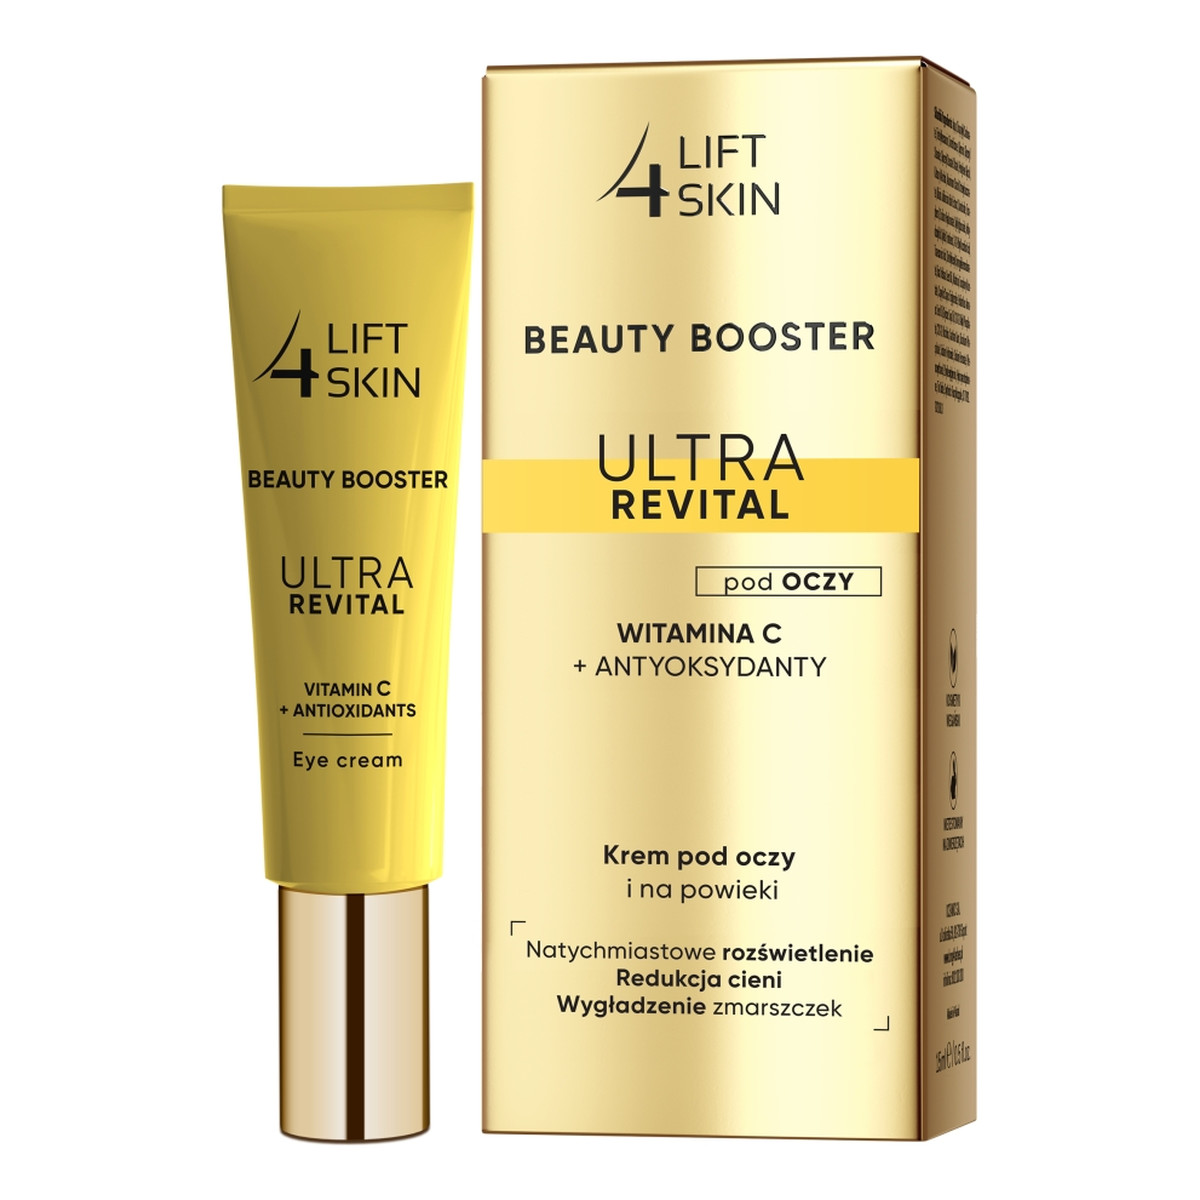 Lift 4 Skin Beauty Booster Ultra Revital Witamina C + Antyoksydanty Krem pod oczy i na powieki 15ml